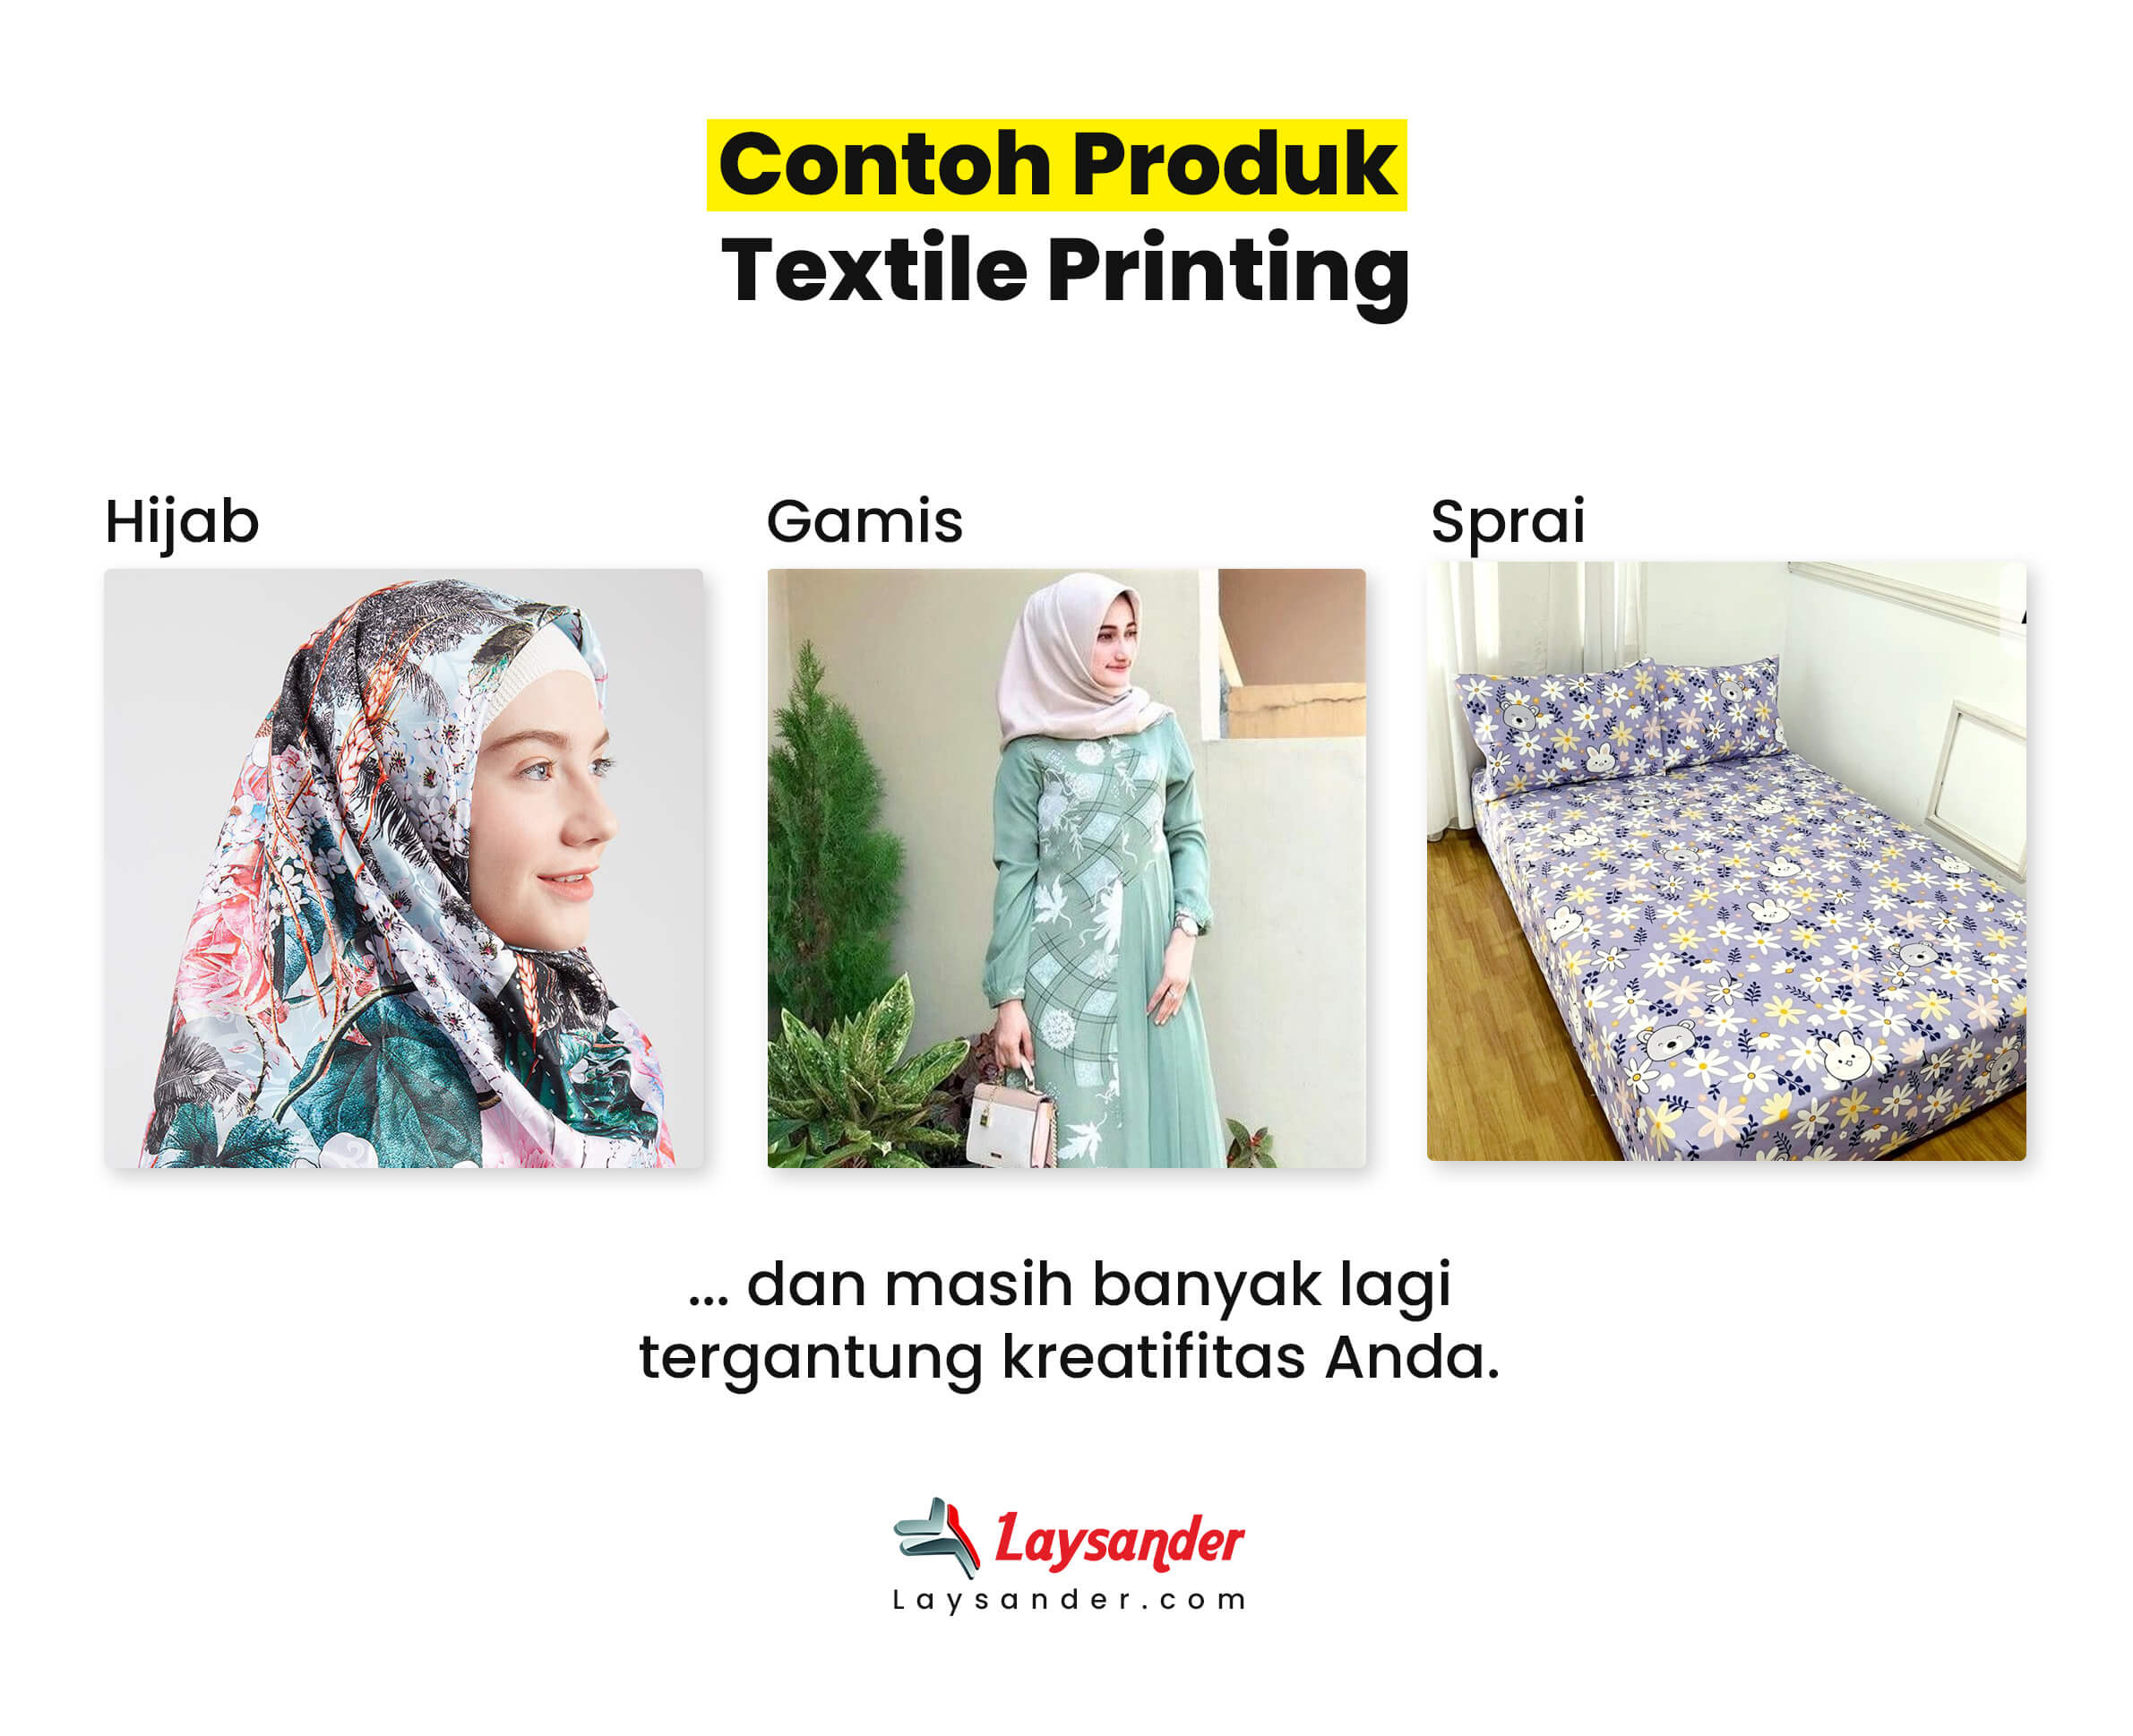 Contoh Produk Textile Printing